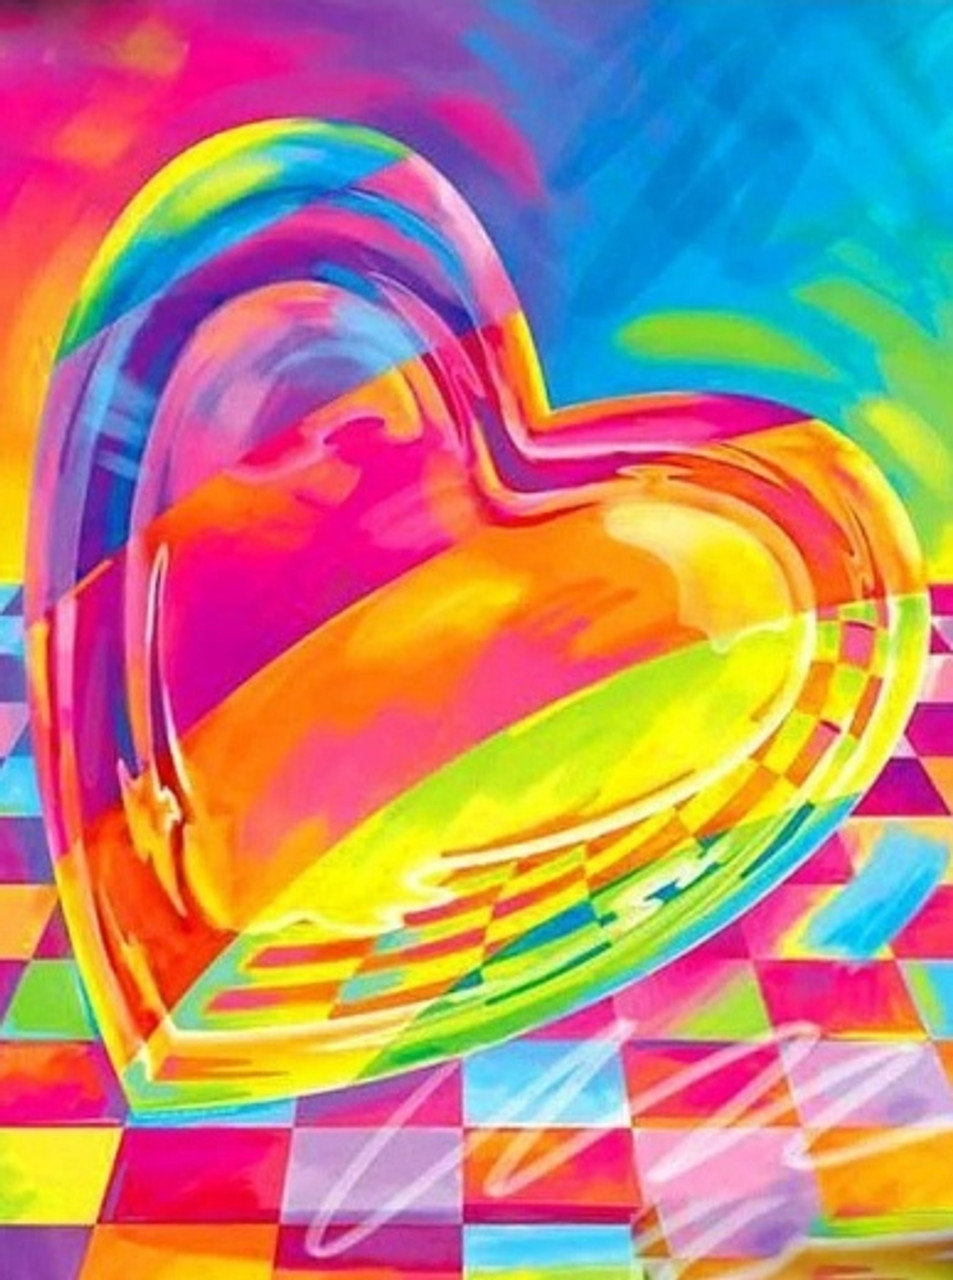 5D Diamond Painting Rainbow Heart Mandala Kit